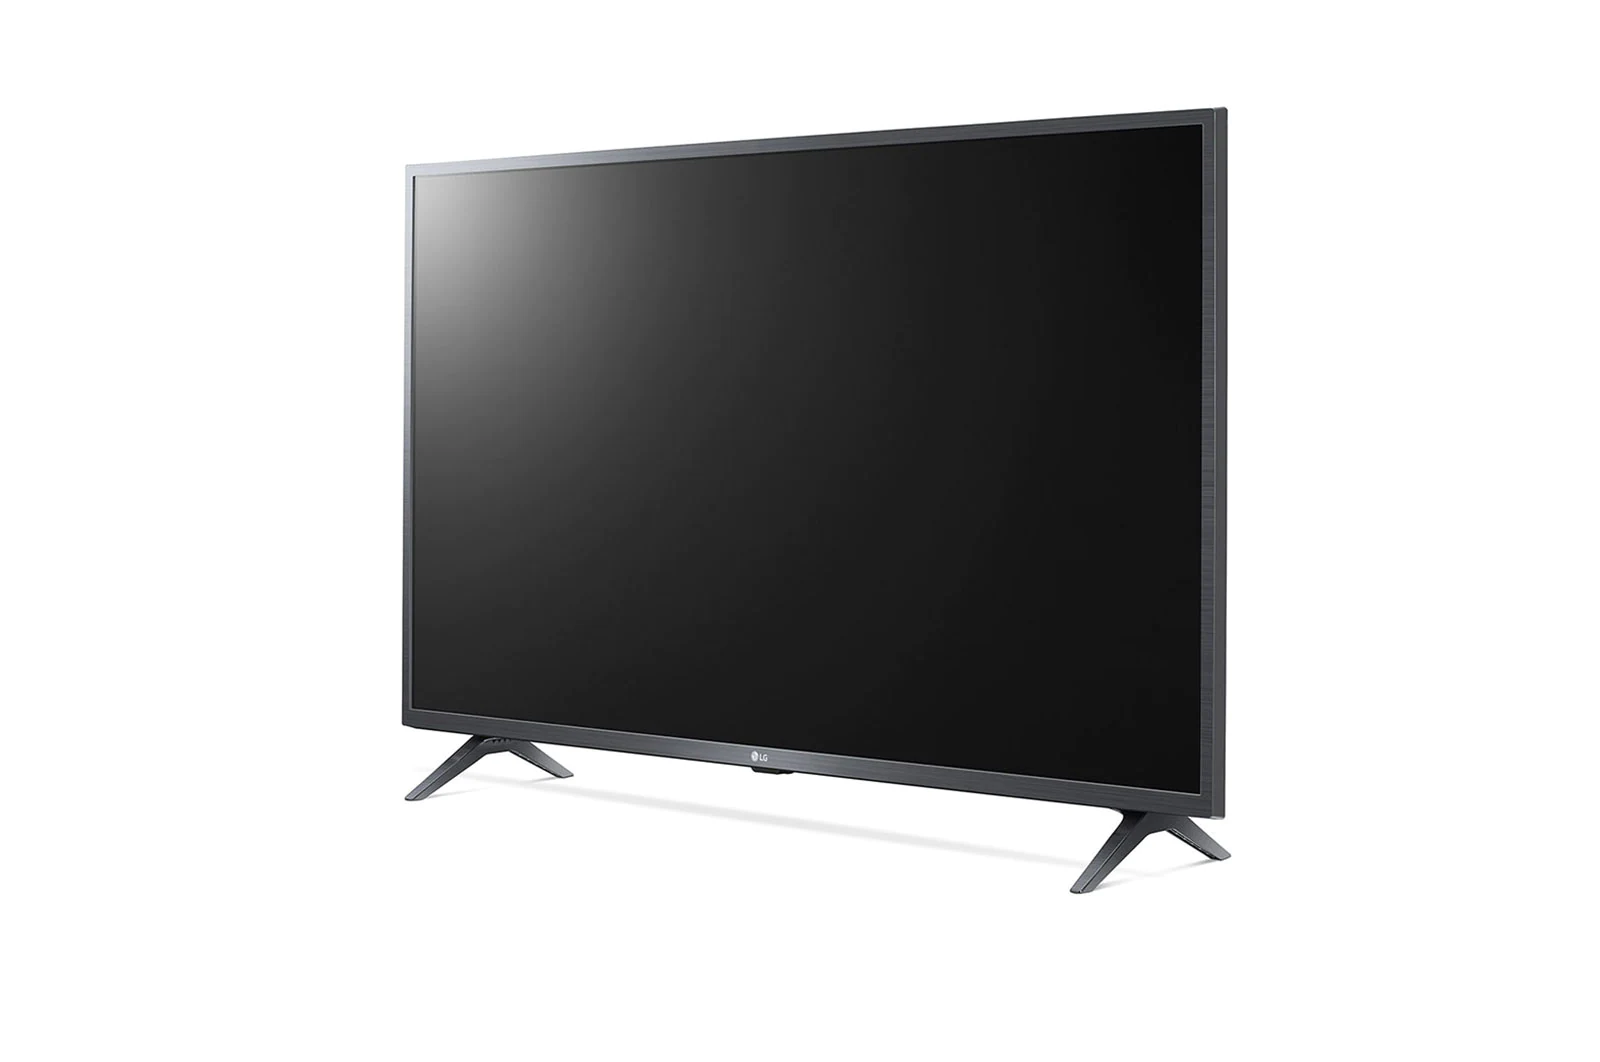 LG LED Smart TV 43 Inch Series Full HDR Smart LED TV - 43LM6370 3